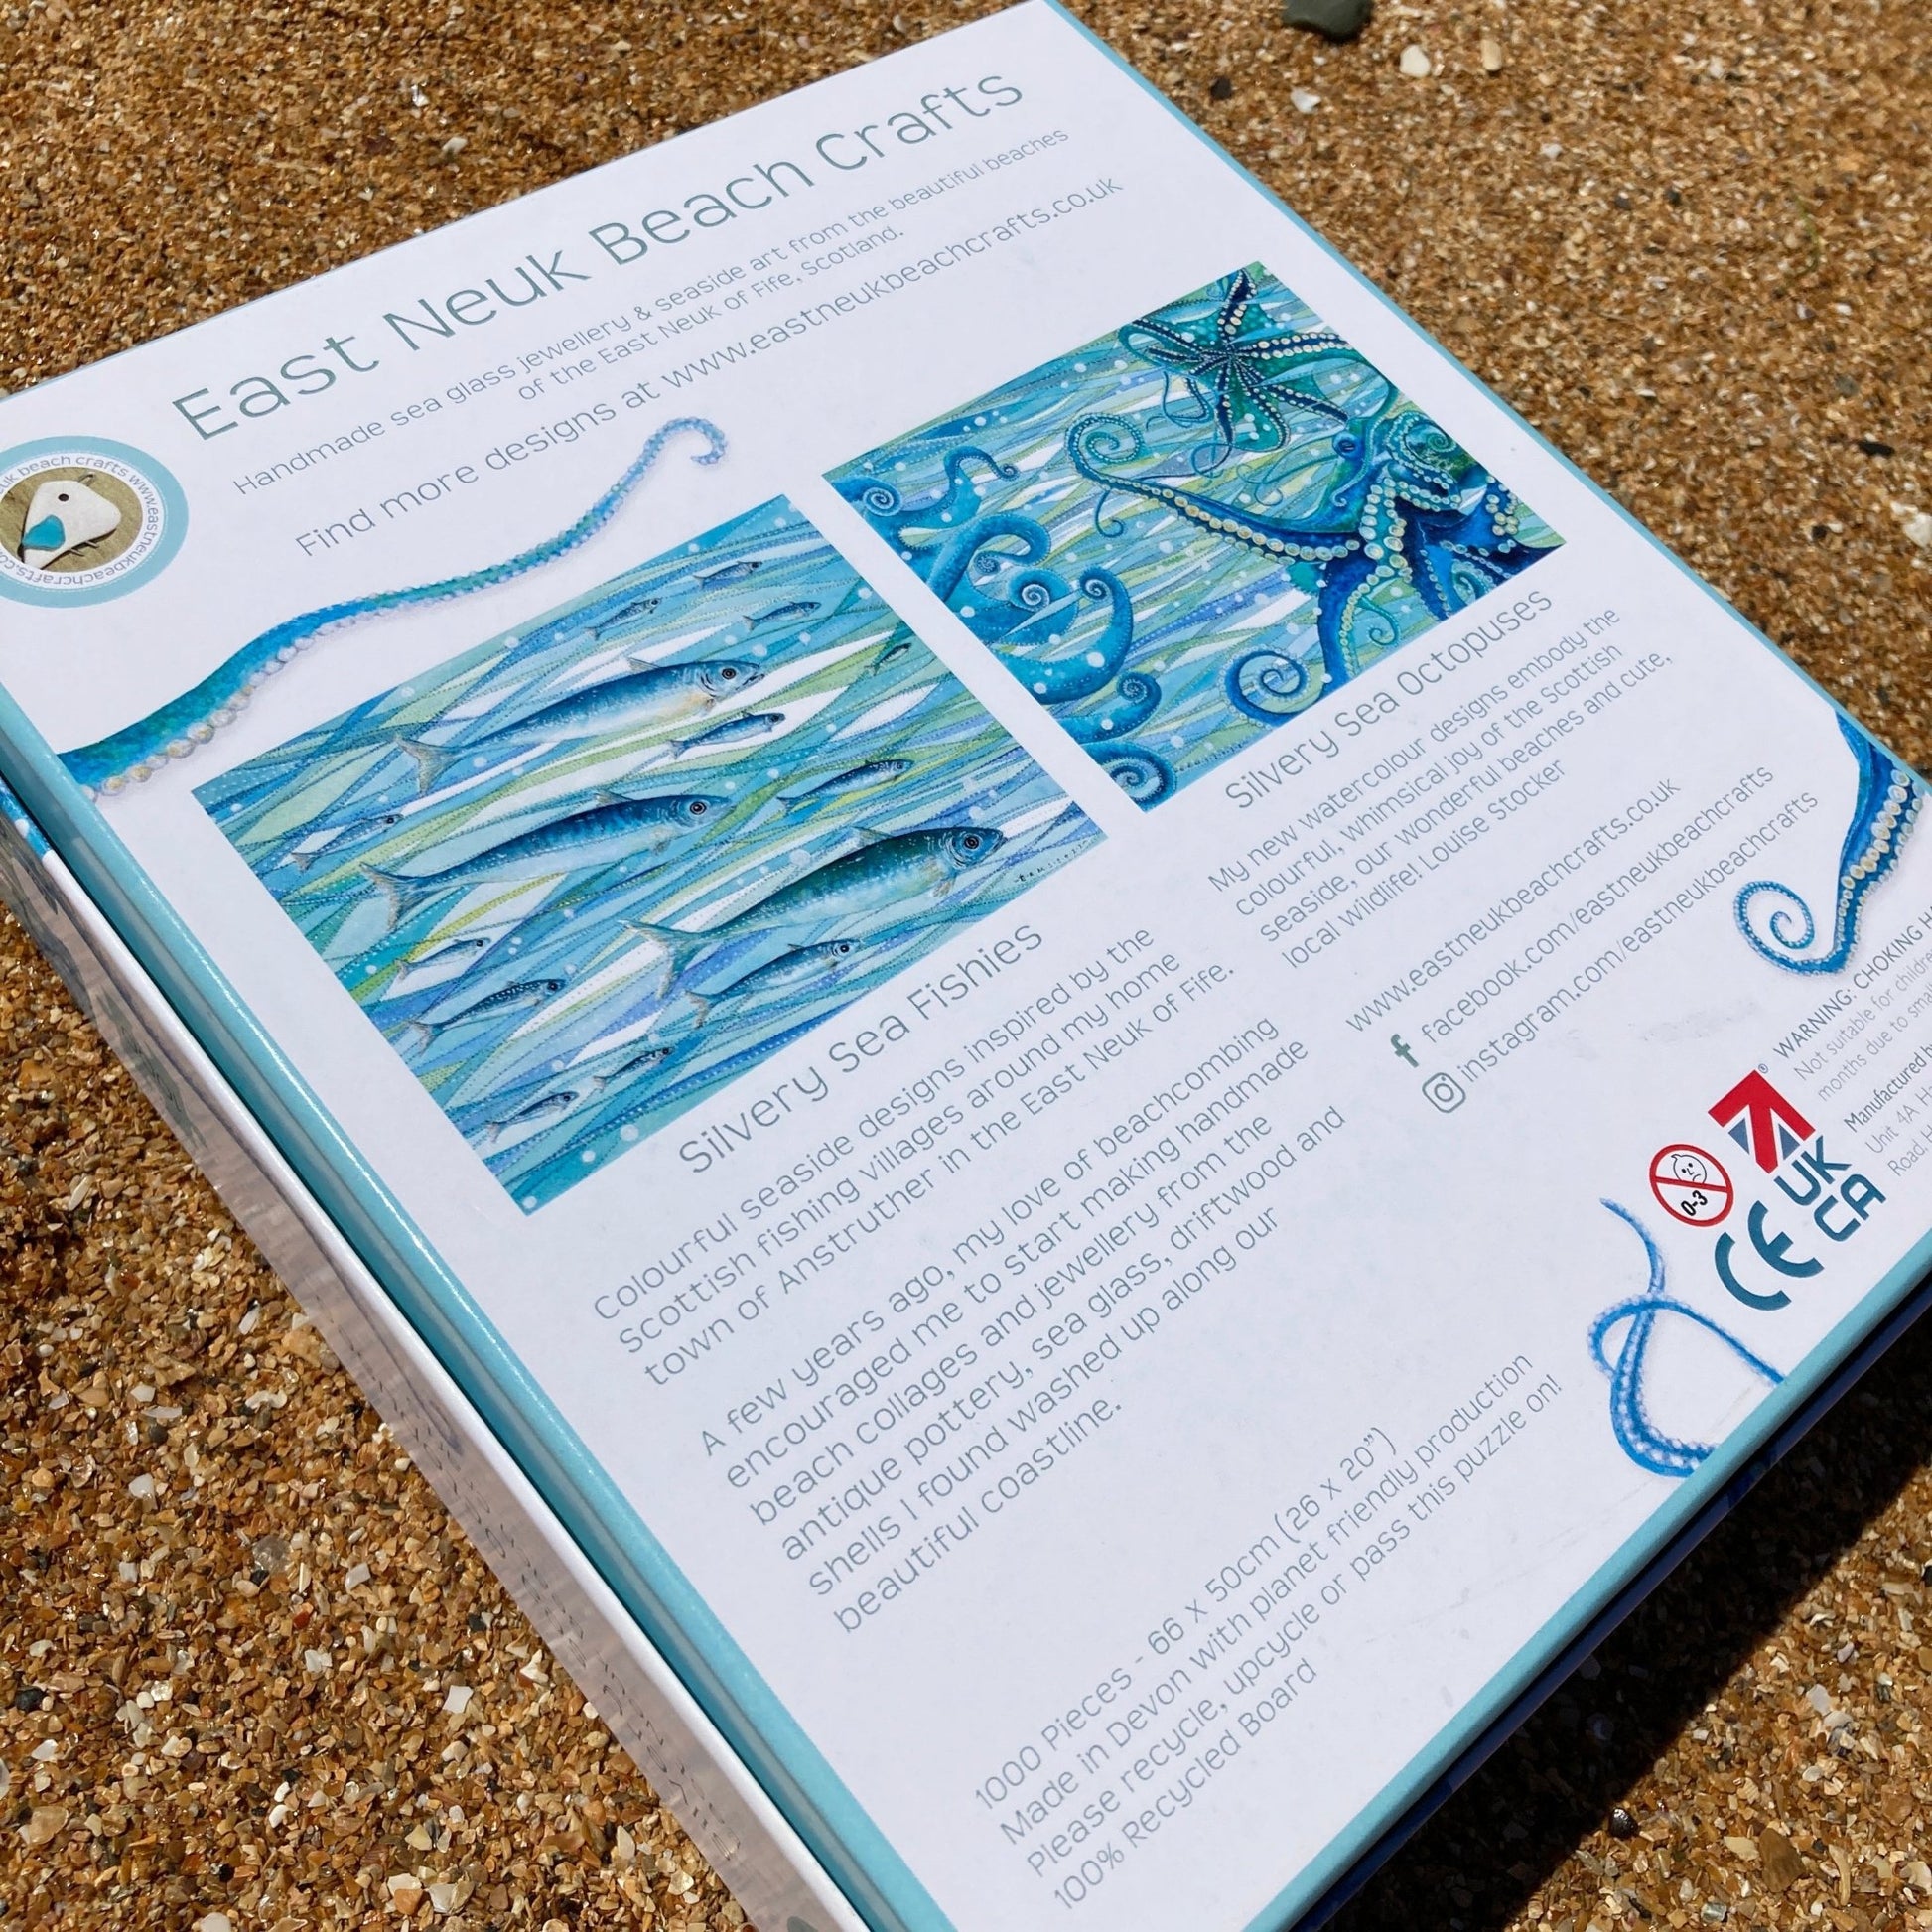 Fish - Seaside Jigsaw Puzzle 1000 pieces - Silvery Seas - Coastal Art by Elizabeth Stocker - East Neuk Beach Crafts